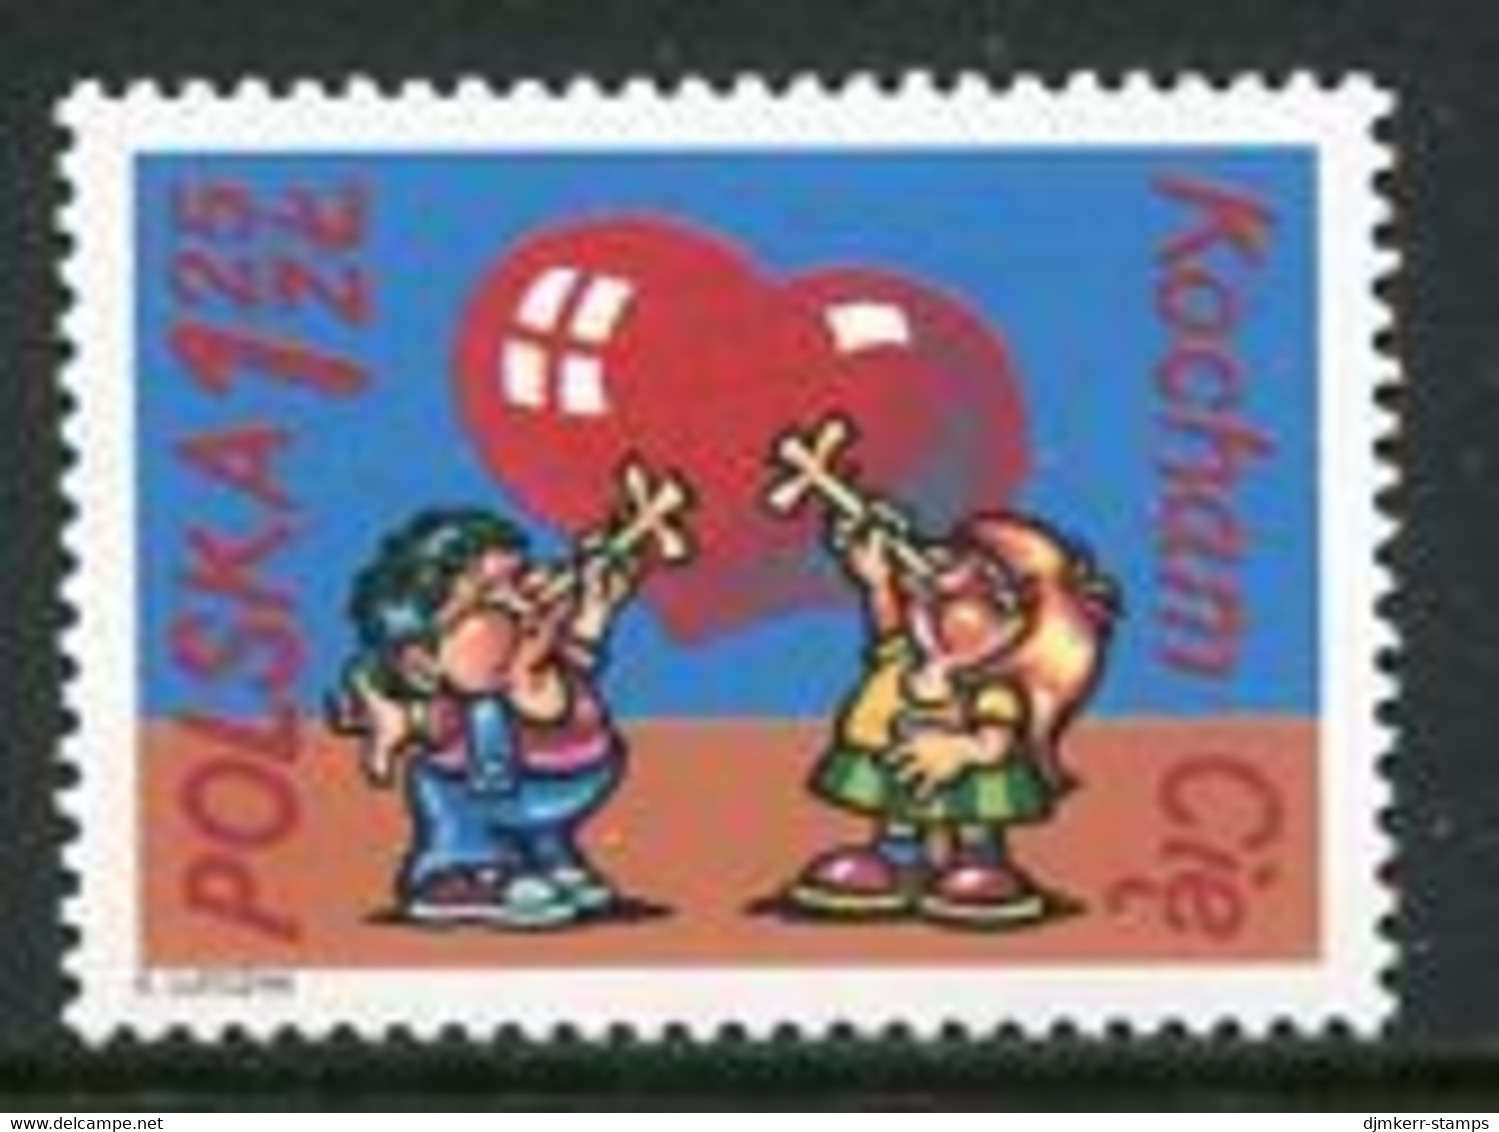 POLAND 2004 Valentines Day Greetings MNH / **.  Michel 4095 - Ongebruikt